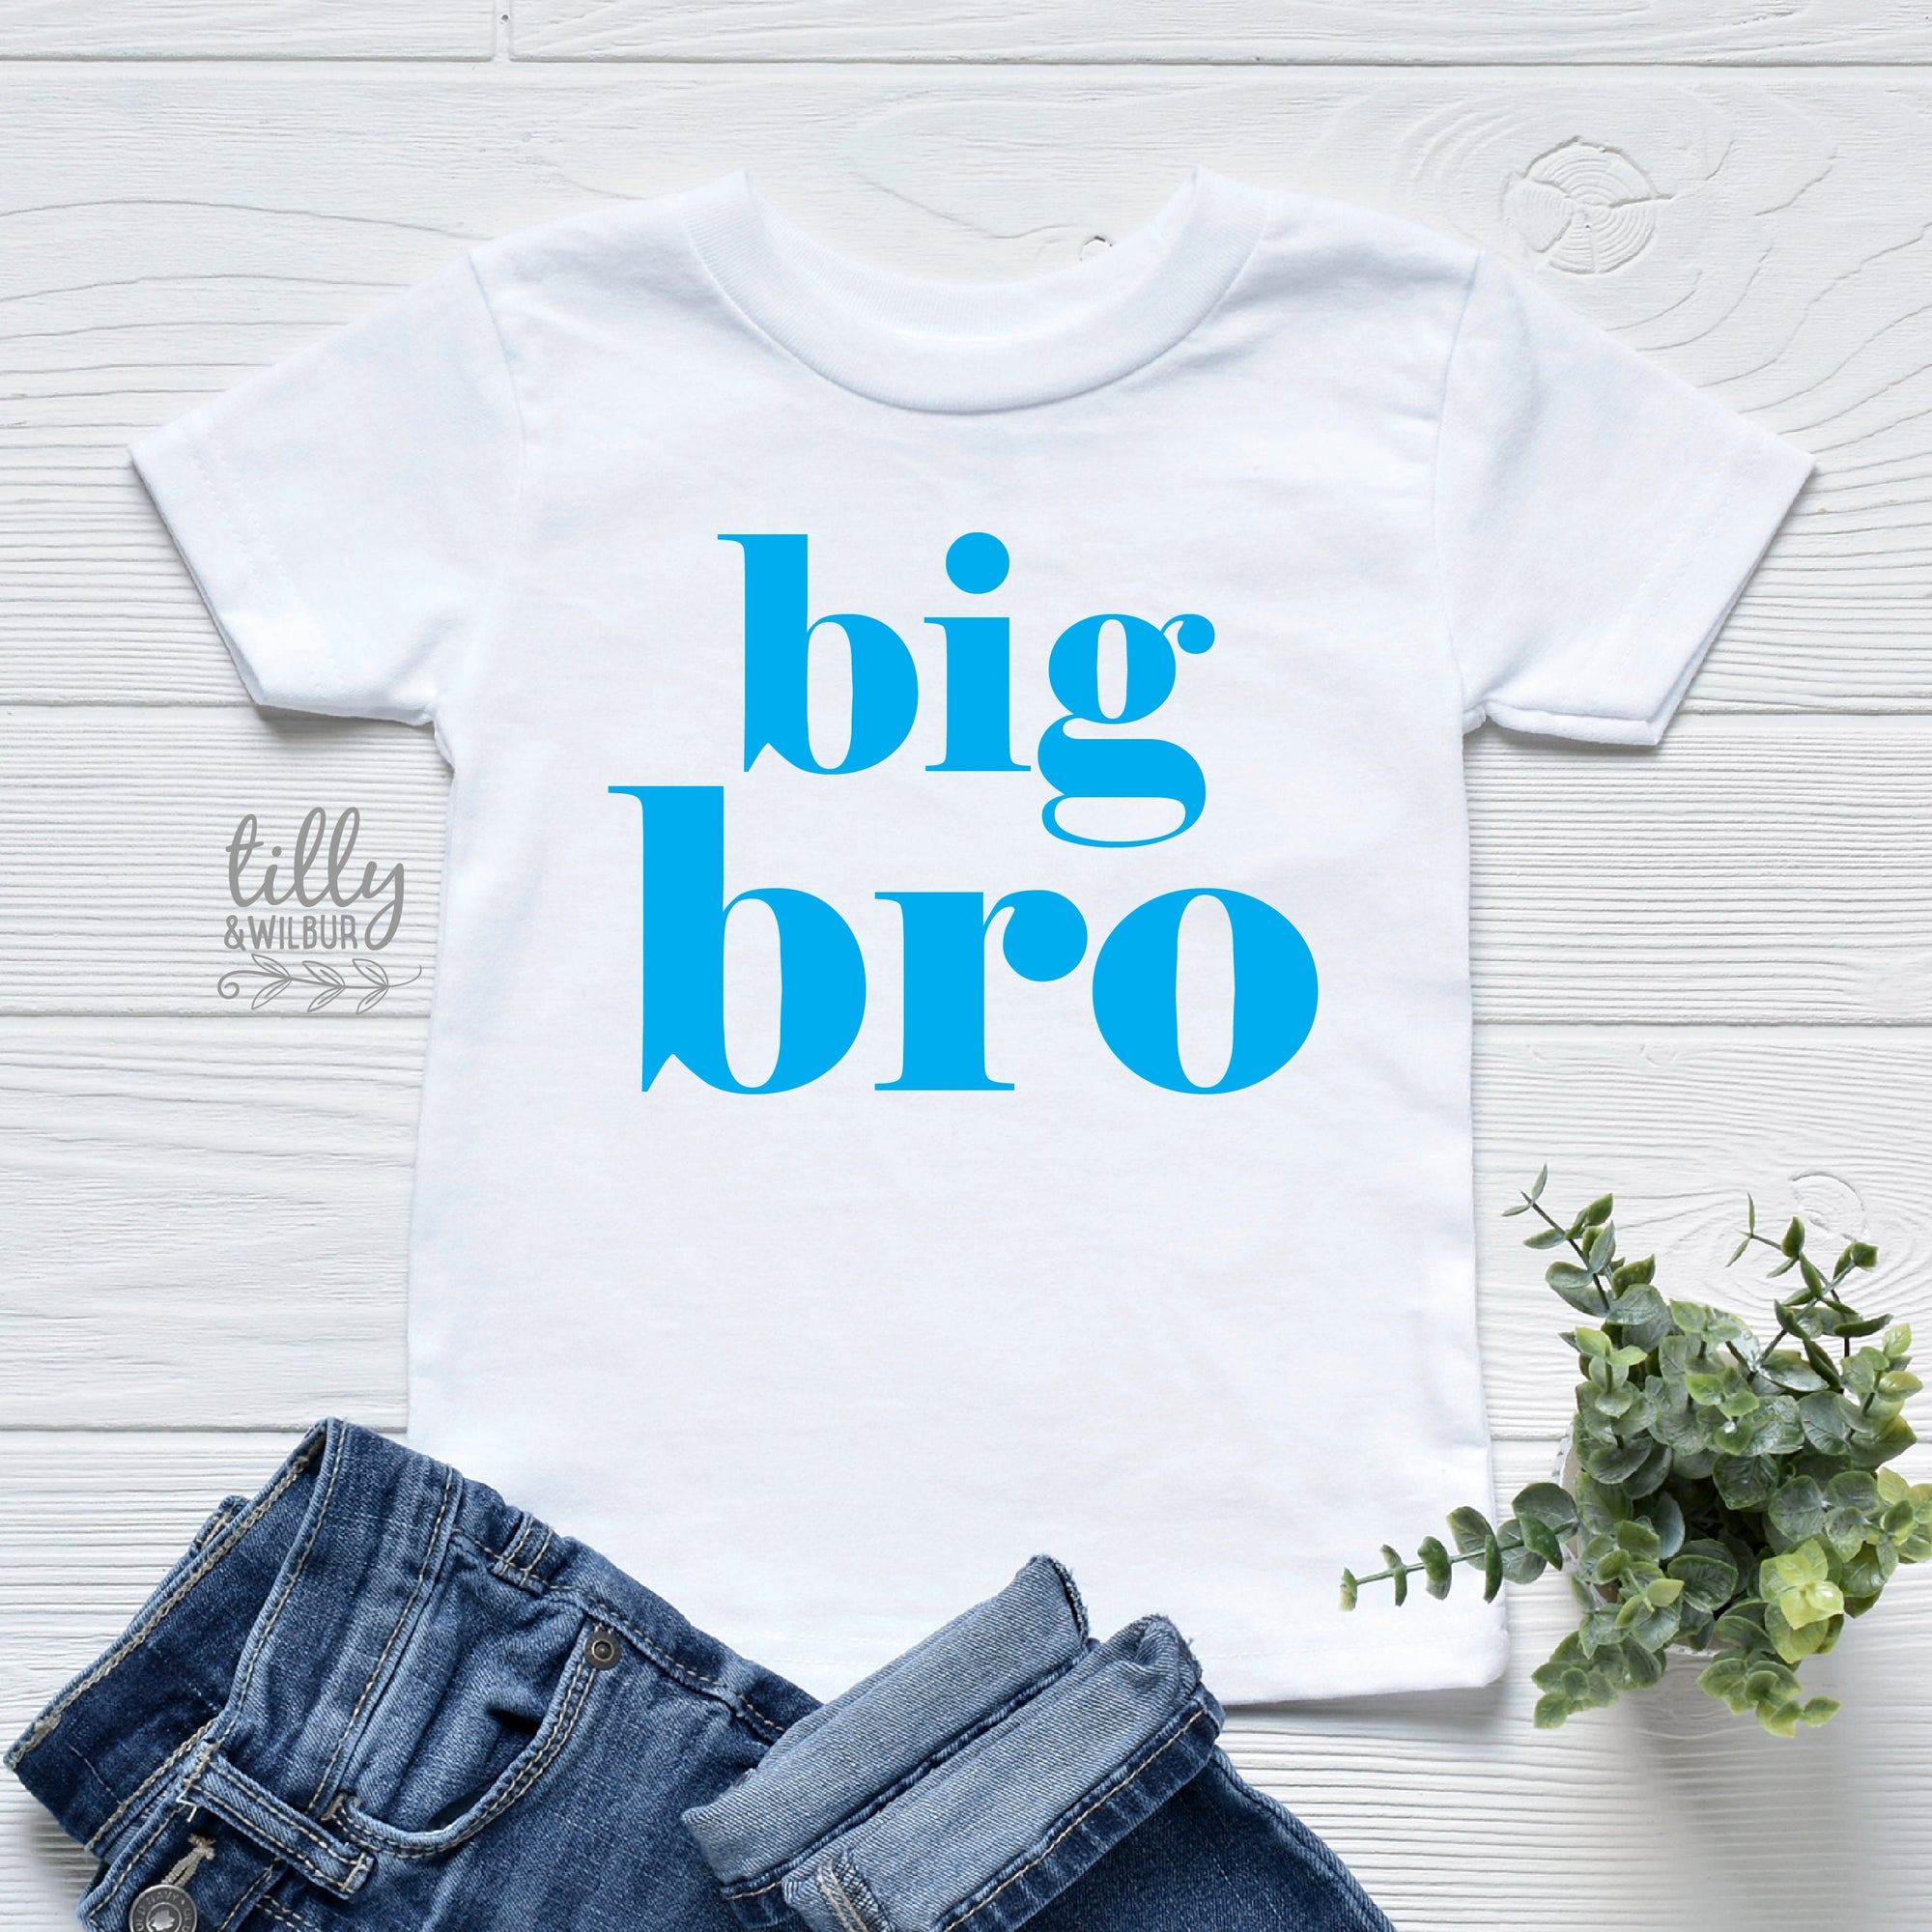 Big Bro T-Shirt, Promoted To Big Brother T-Shirt, Big Brother Shirt, I'm Going To Be A Big Brother, Pregnancy Announcement, Big Bro Shirt